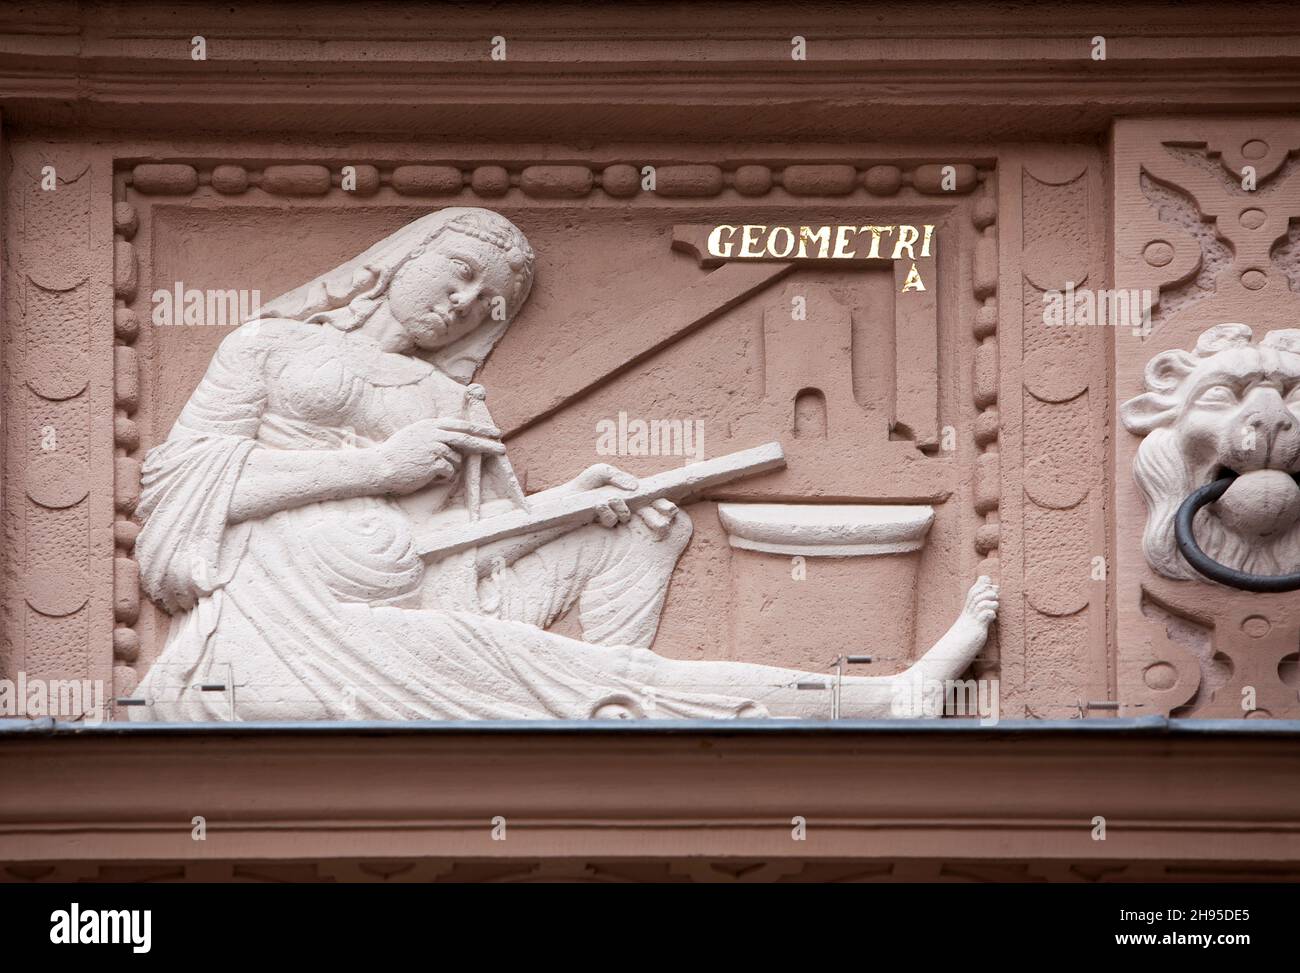 Geometria, geometry, figure  at the Town Hall of Lemgo, North Rhine-Westphalia, Germany, Europe Stock Photo